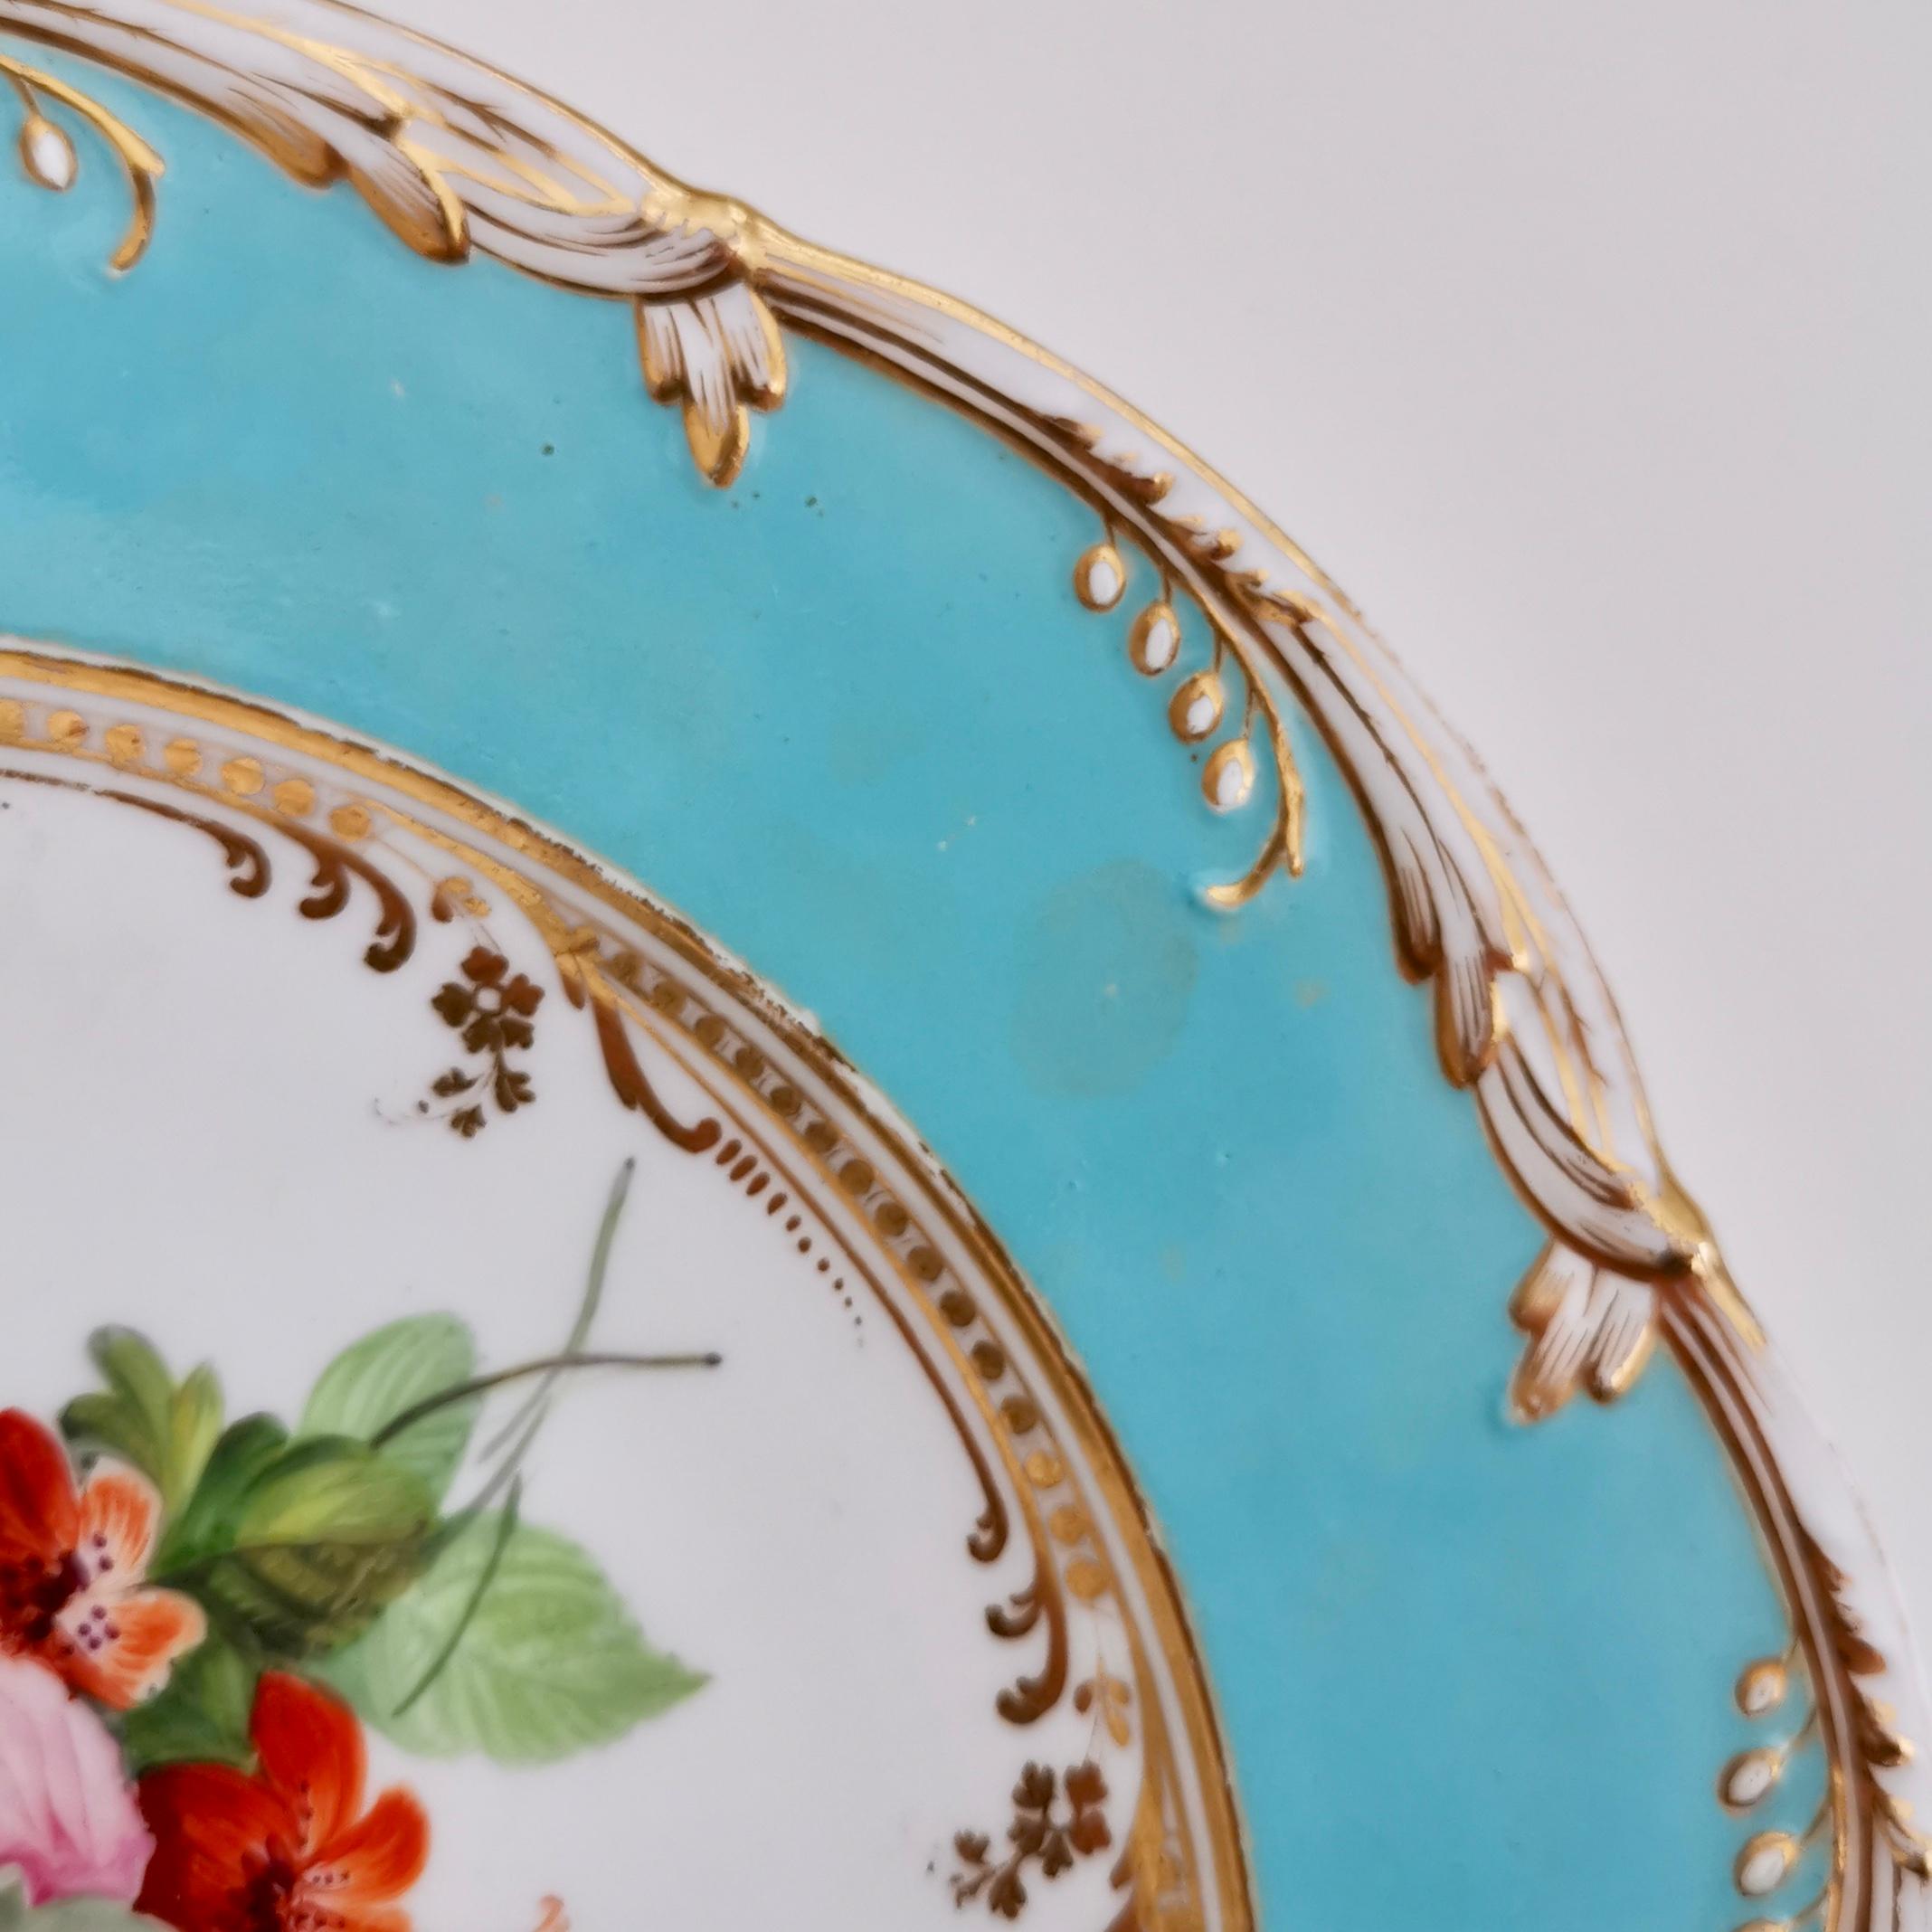 English Coalport Porcelain Plate, Sky Blue with Flowers by Thomas Dixon, 1845-1850 '2'